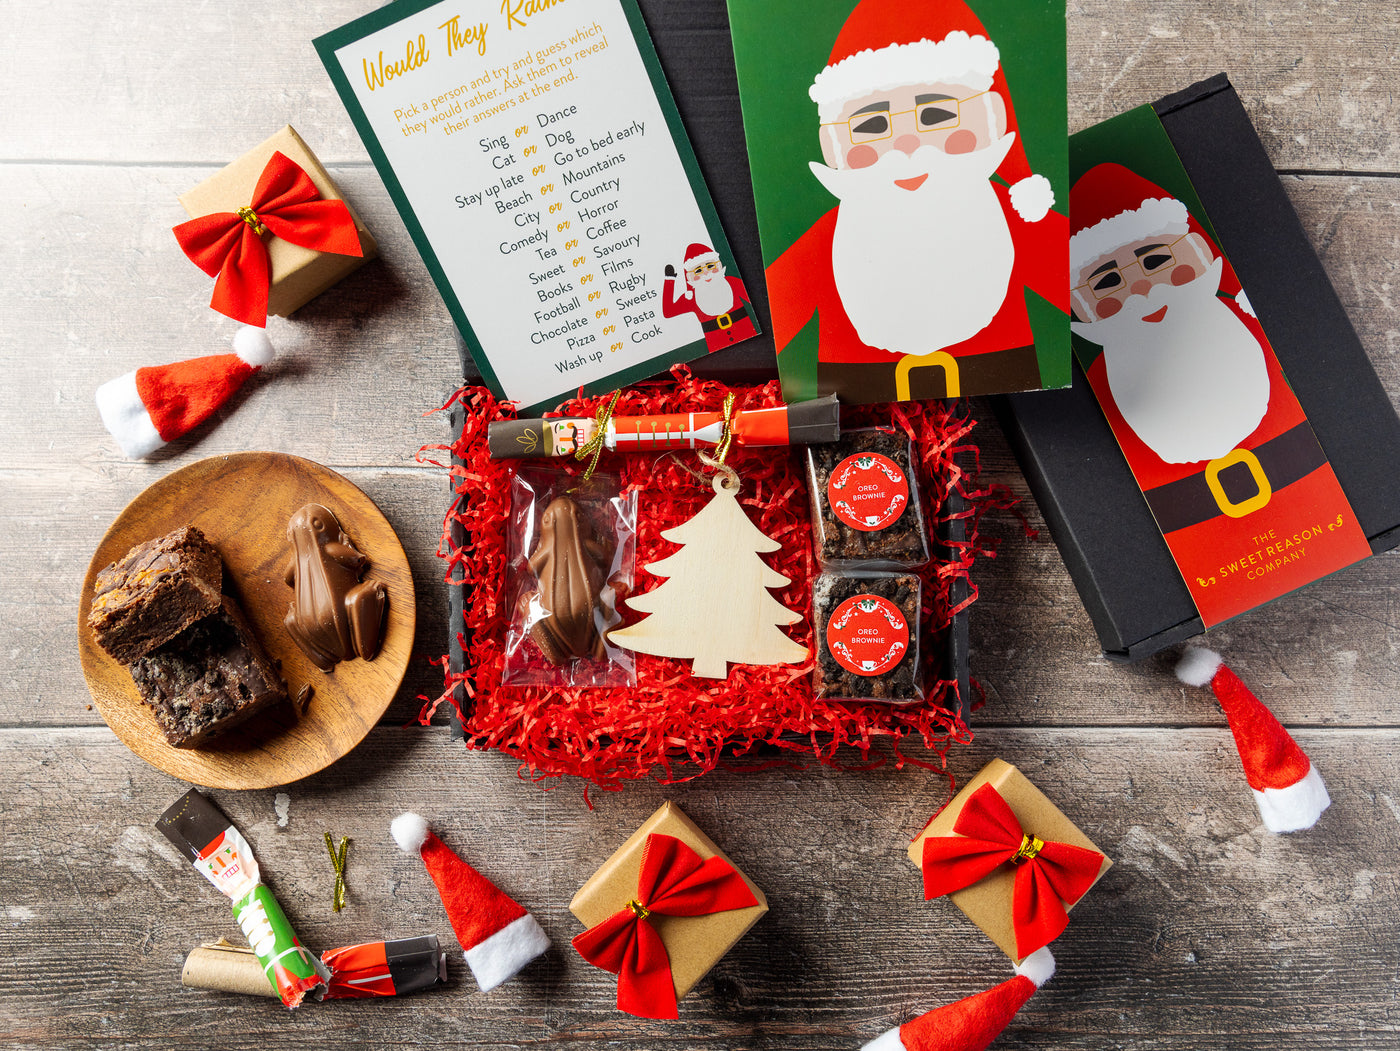 'Santa' Brownies and Treats Letterbox Gift